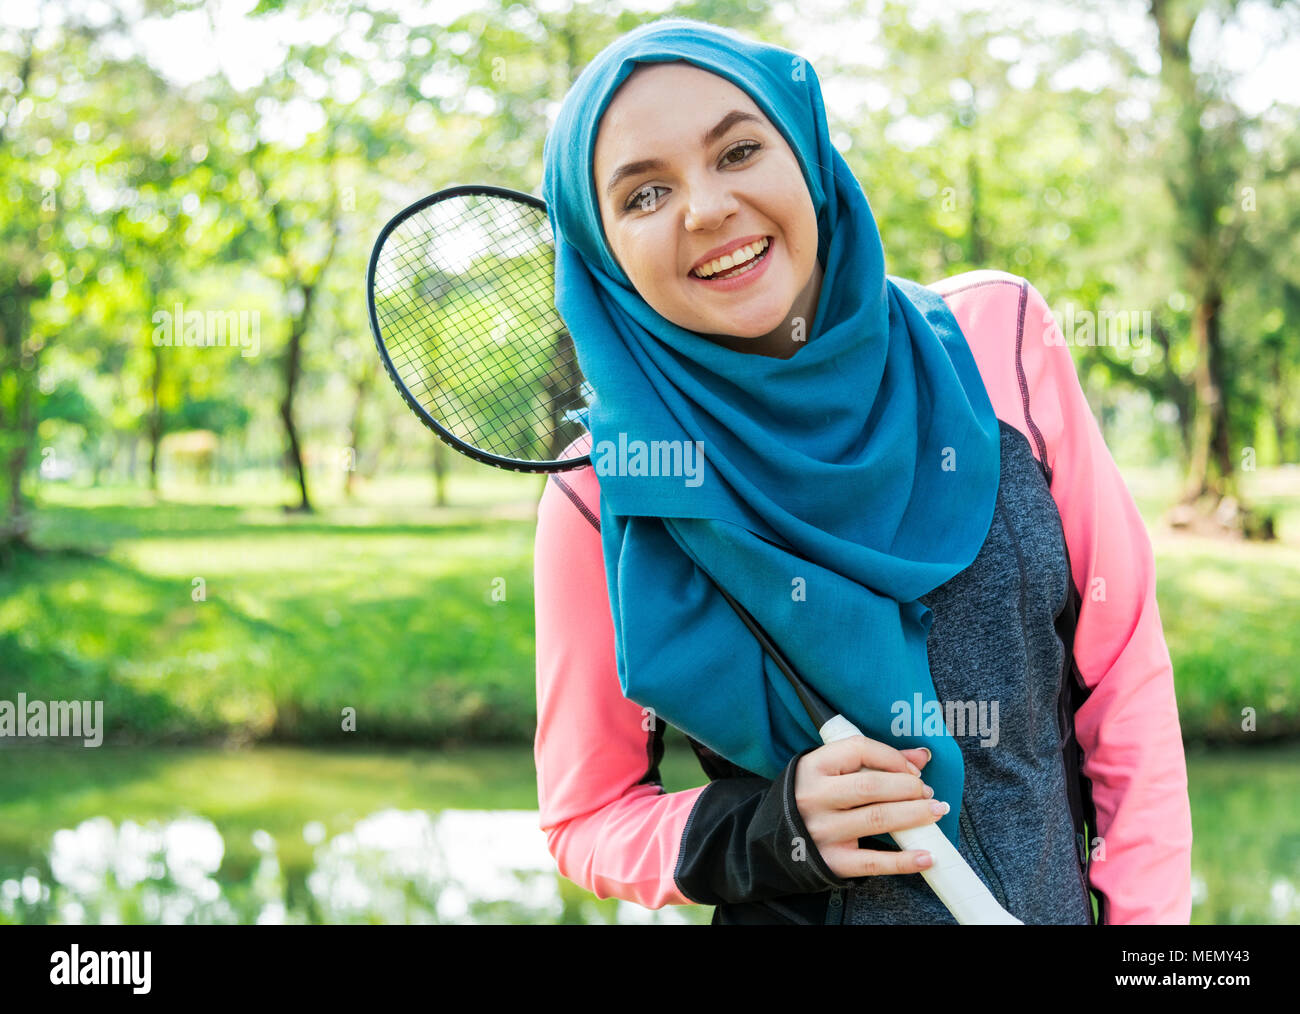 Cheerful muslim woman playing badminton Stock Photo